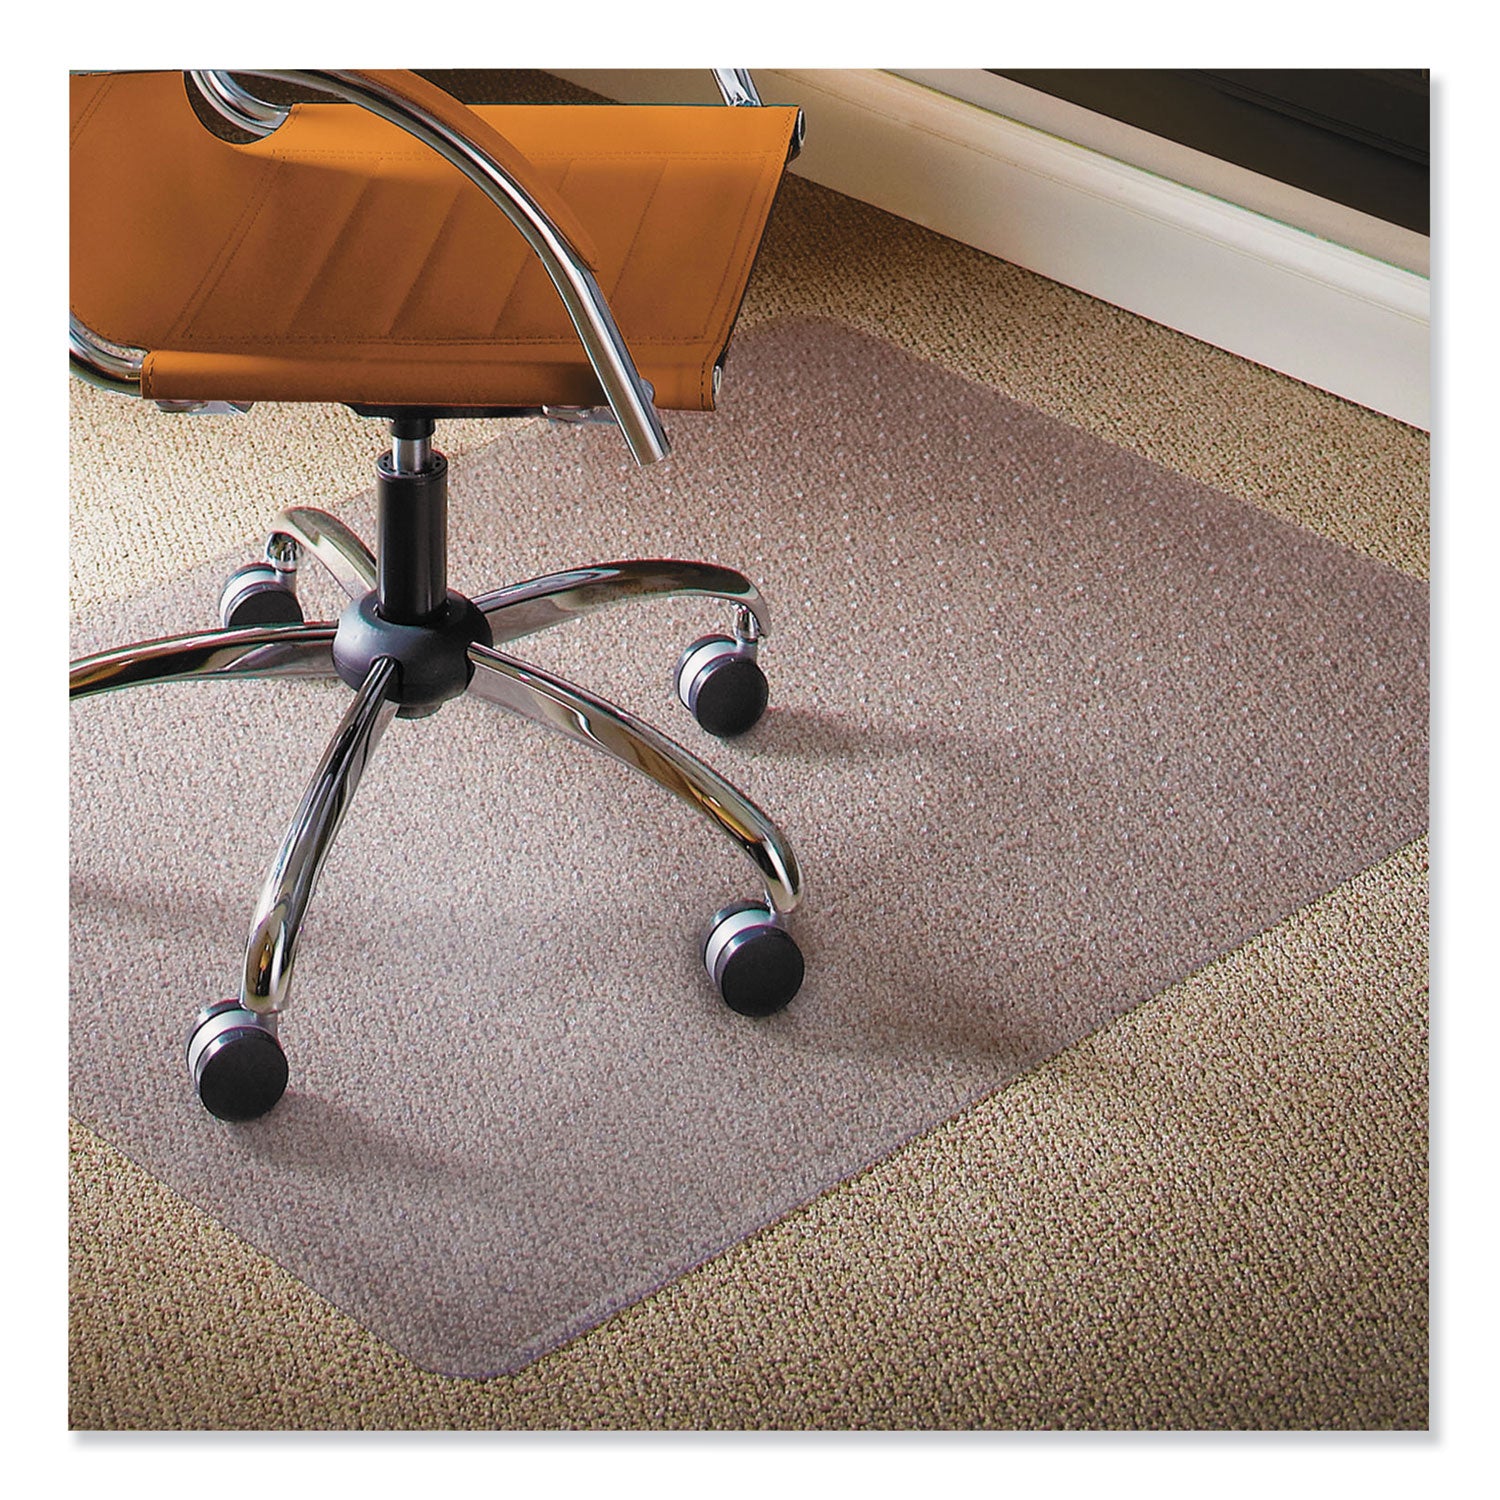 Natural Origins Chair Mat For Carpet, 36 x 48, Clear - 